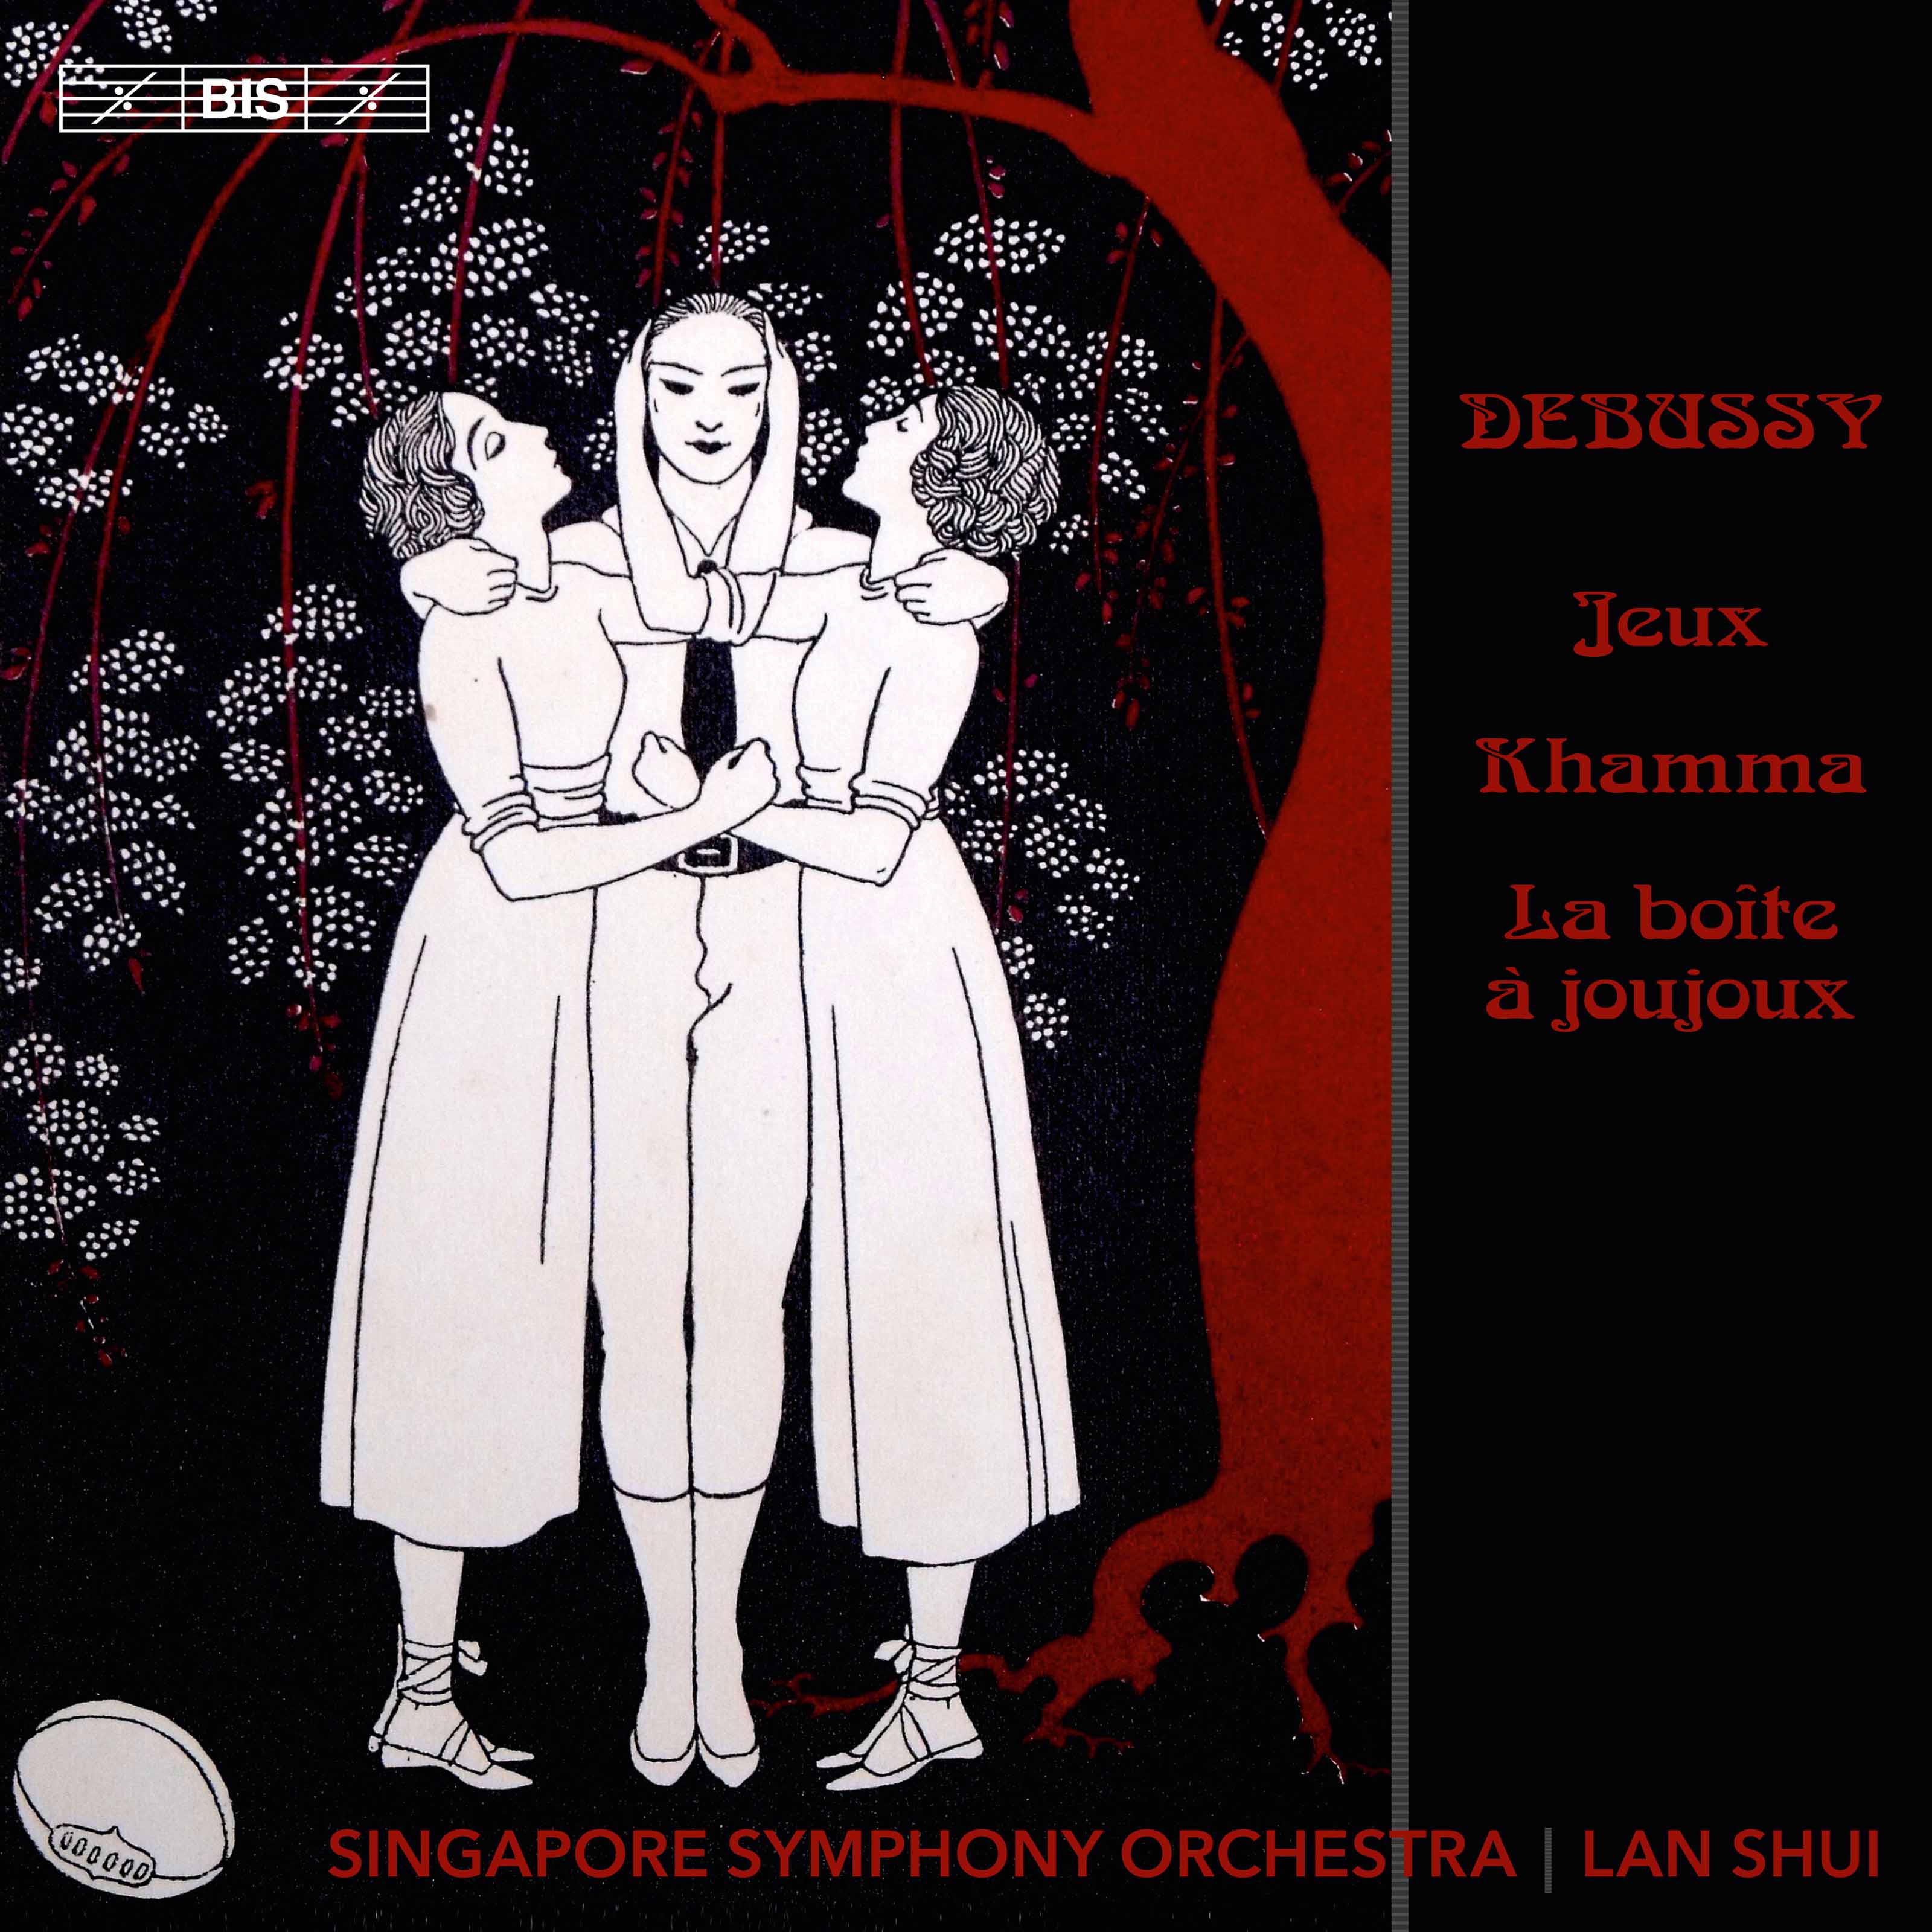 Singapore Symphony Orchestra, Debussy